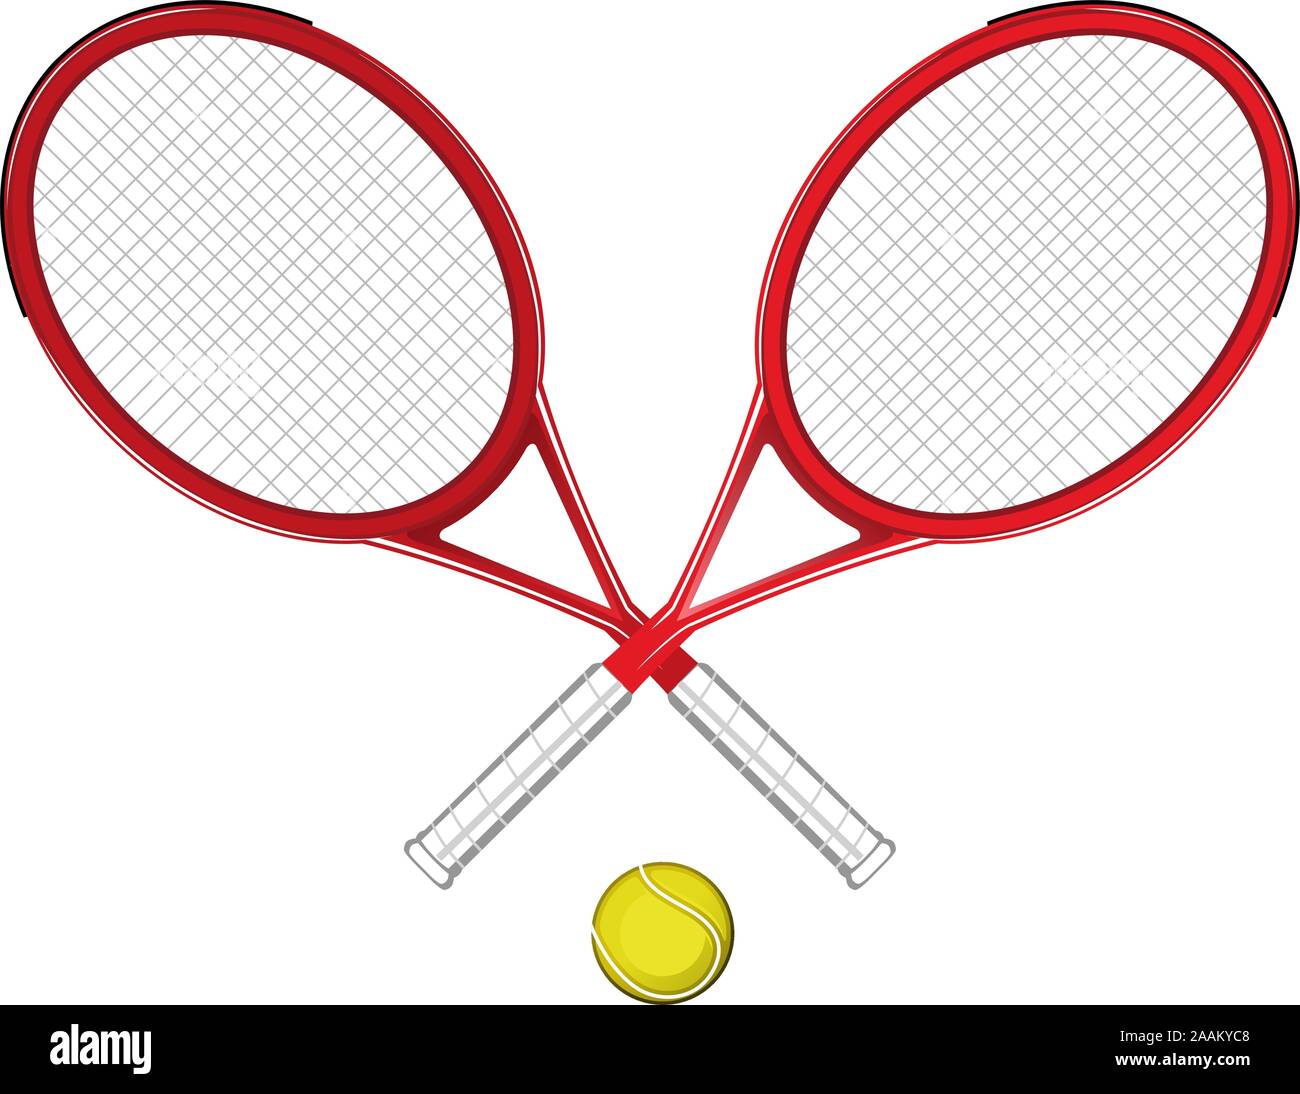 Zwei Tennisschläger mit gelben Kugel Sportgeräte Symbole Vector Illustration. Stock Vektor